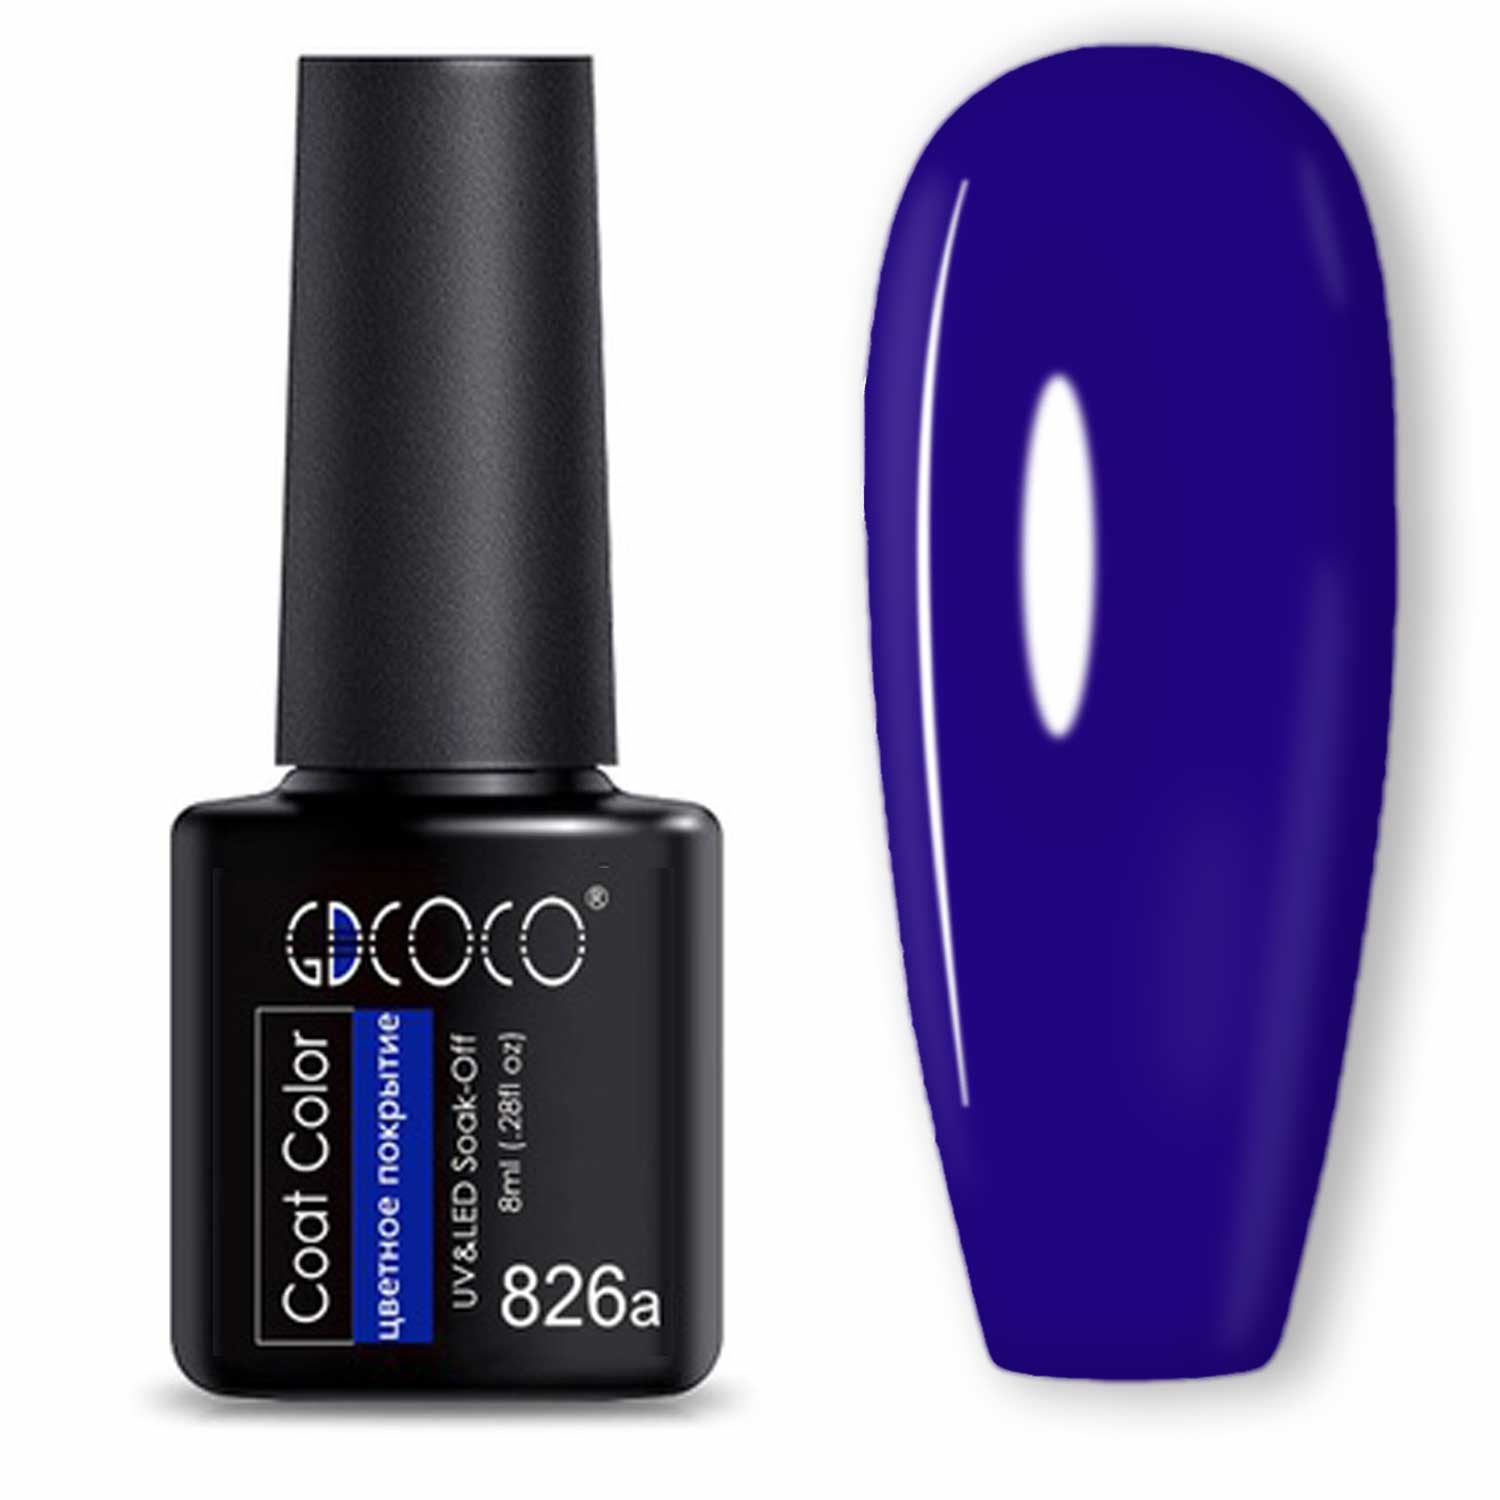 GDCoco gel lakk - UV/LED - 8 ml - 826a